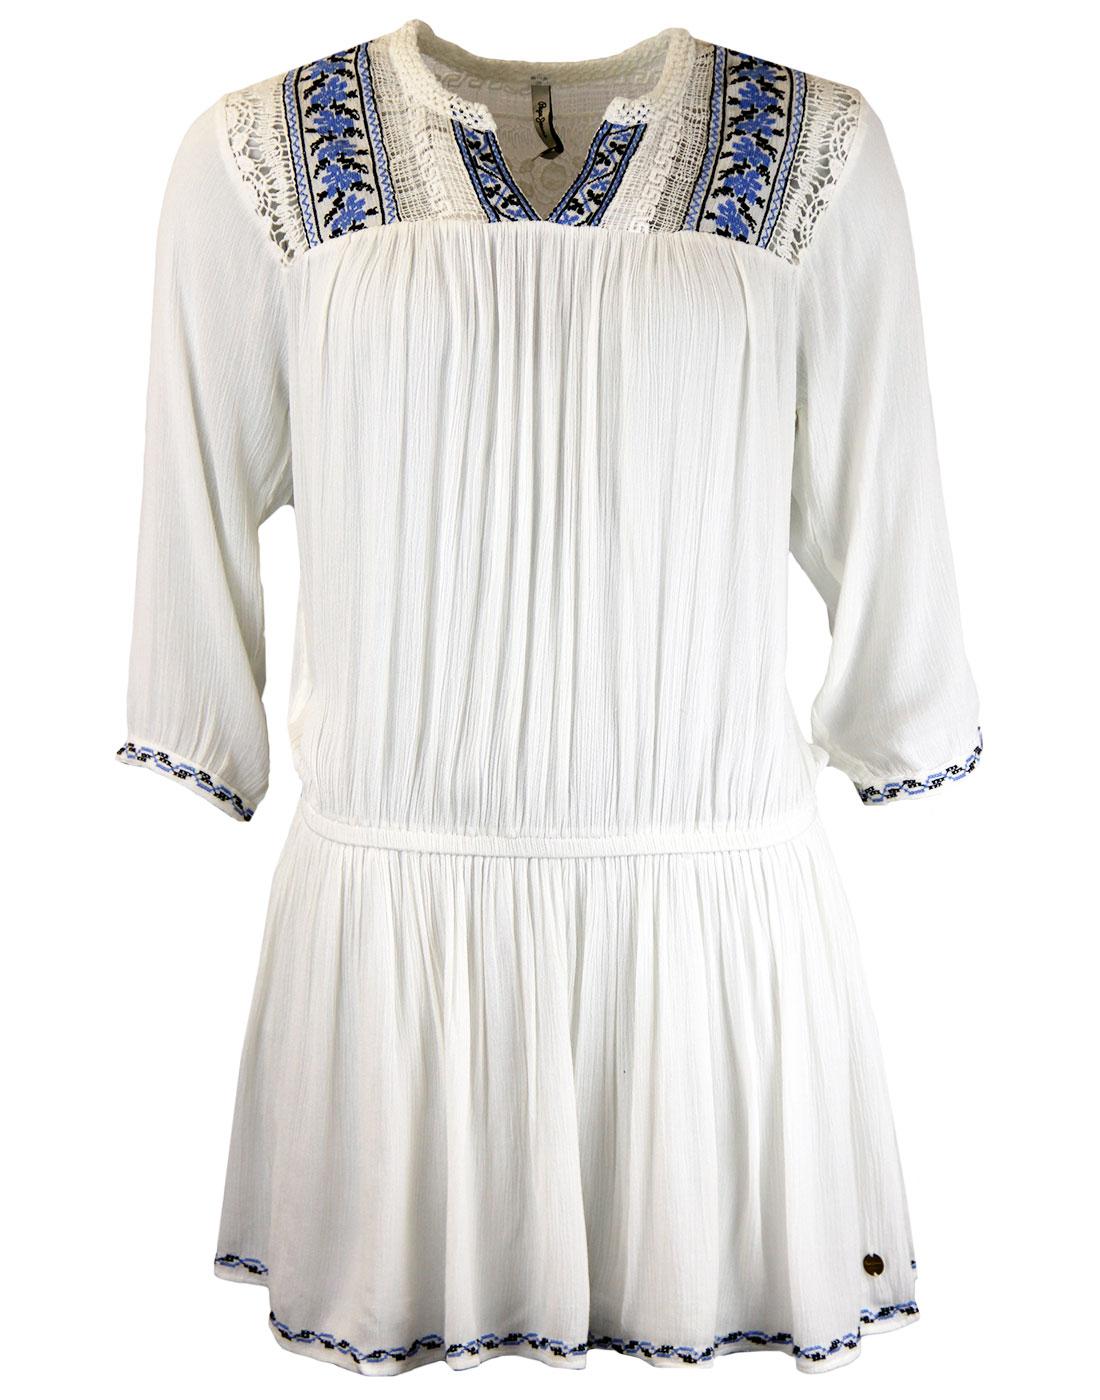 ALADIS PEPE Retro Embroidered Kaftan Tunic Dress